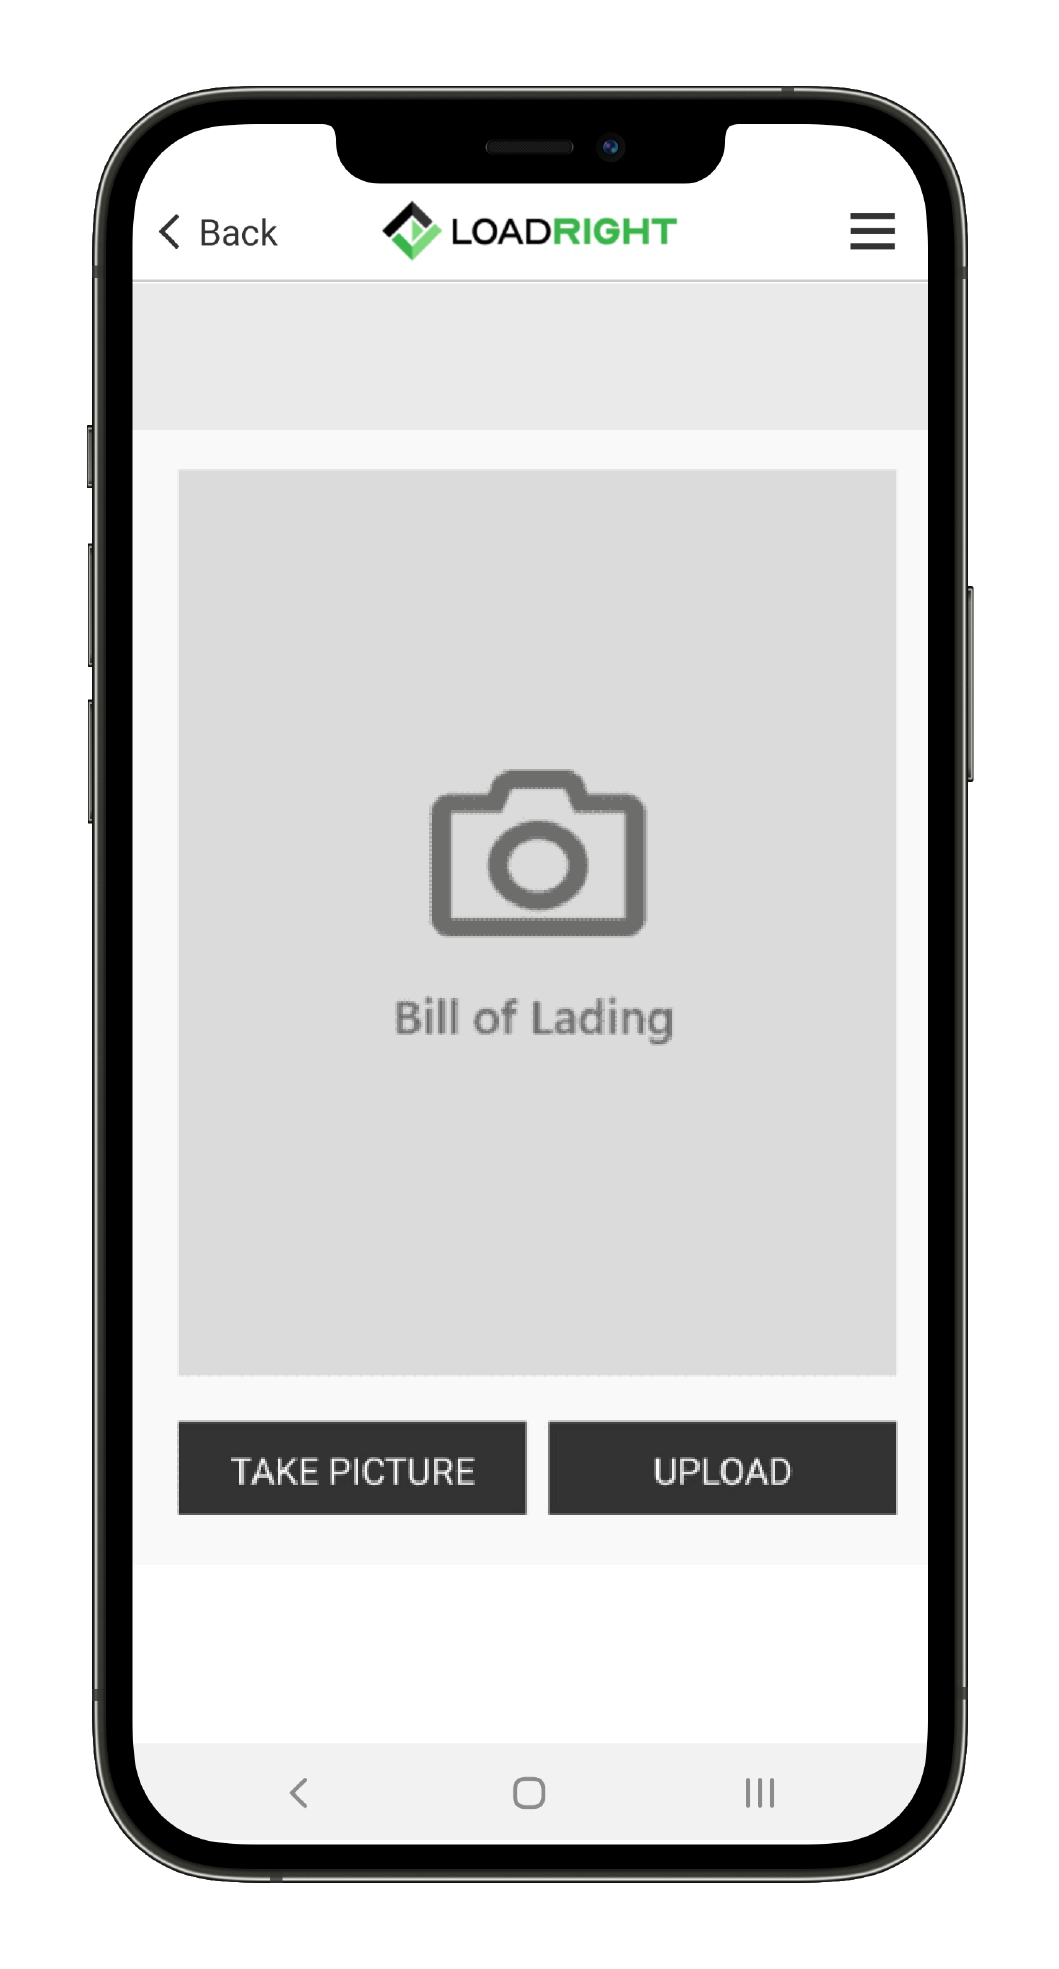 Bill capture screen from the mobile app developed for LoadRight